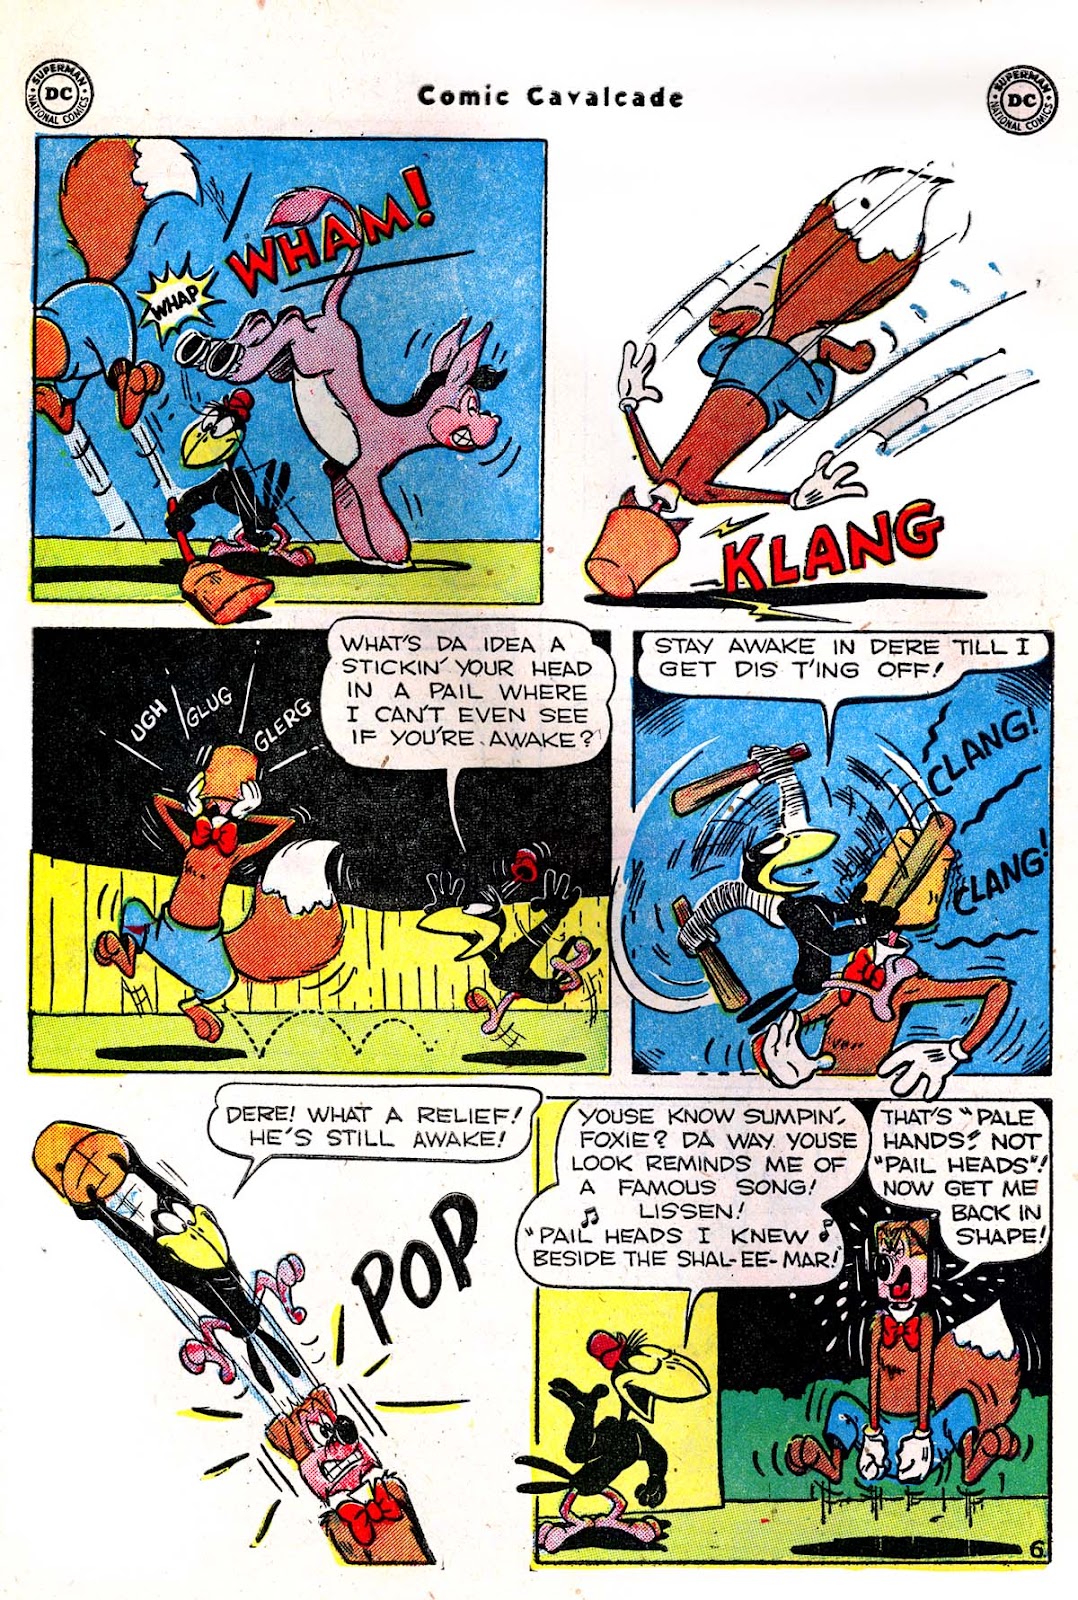 Comic Cavalcade issue 48 - Page 8